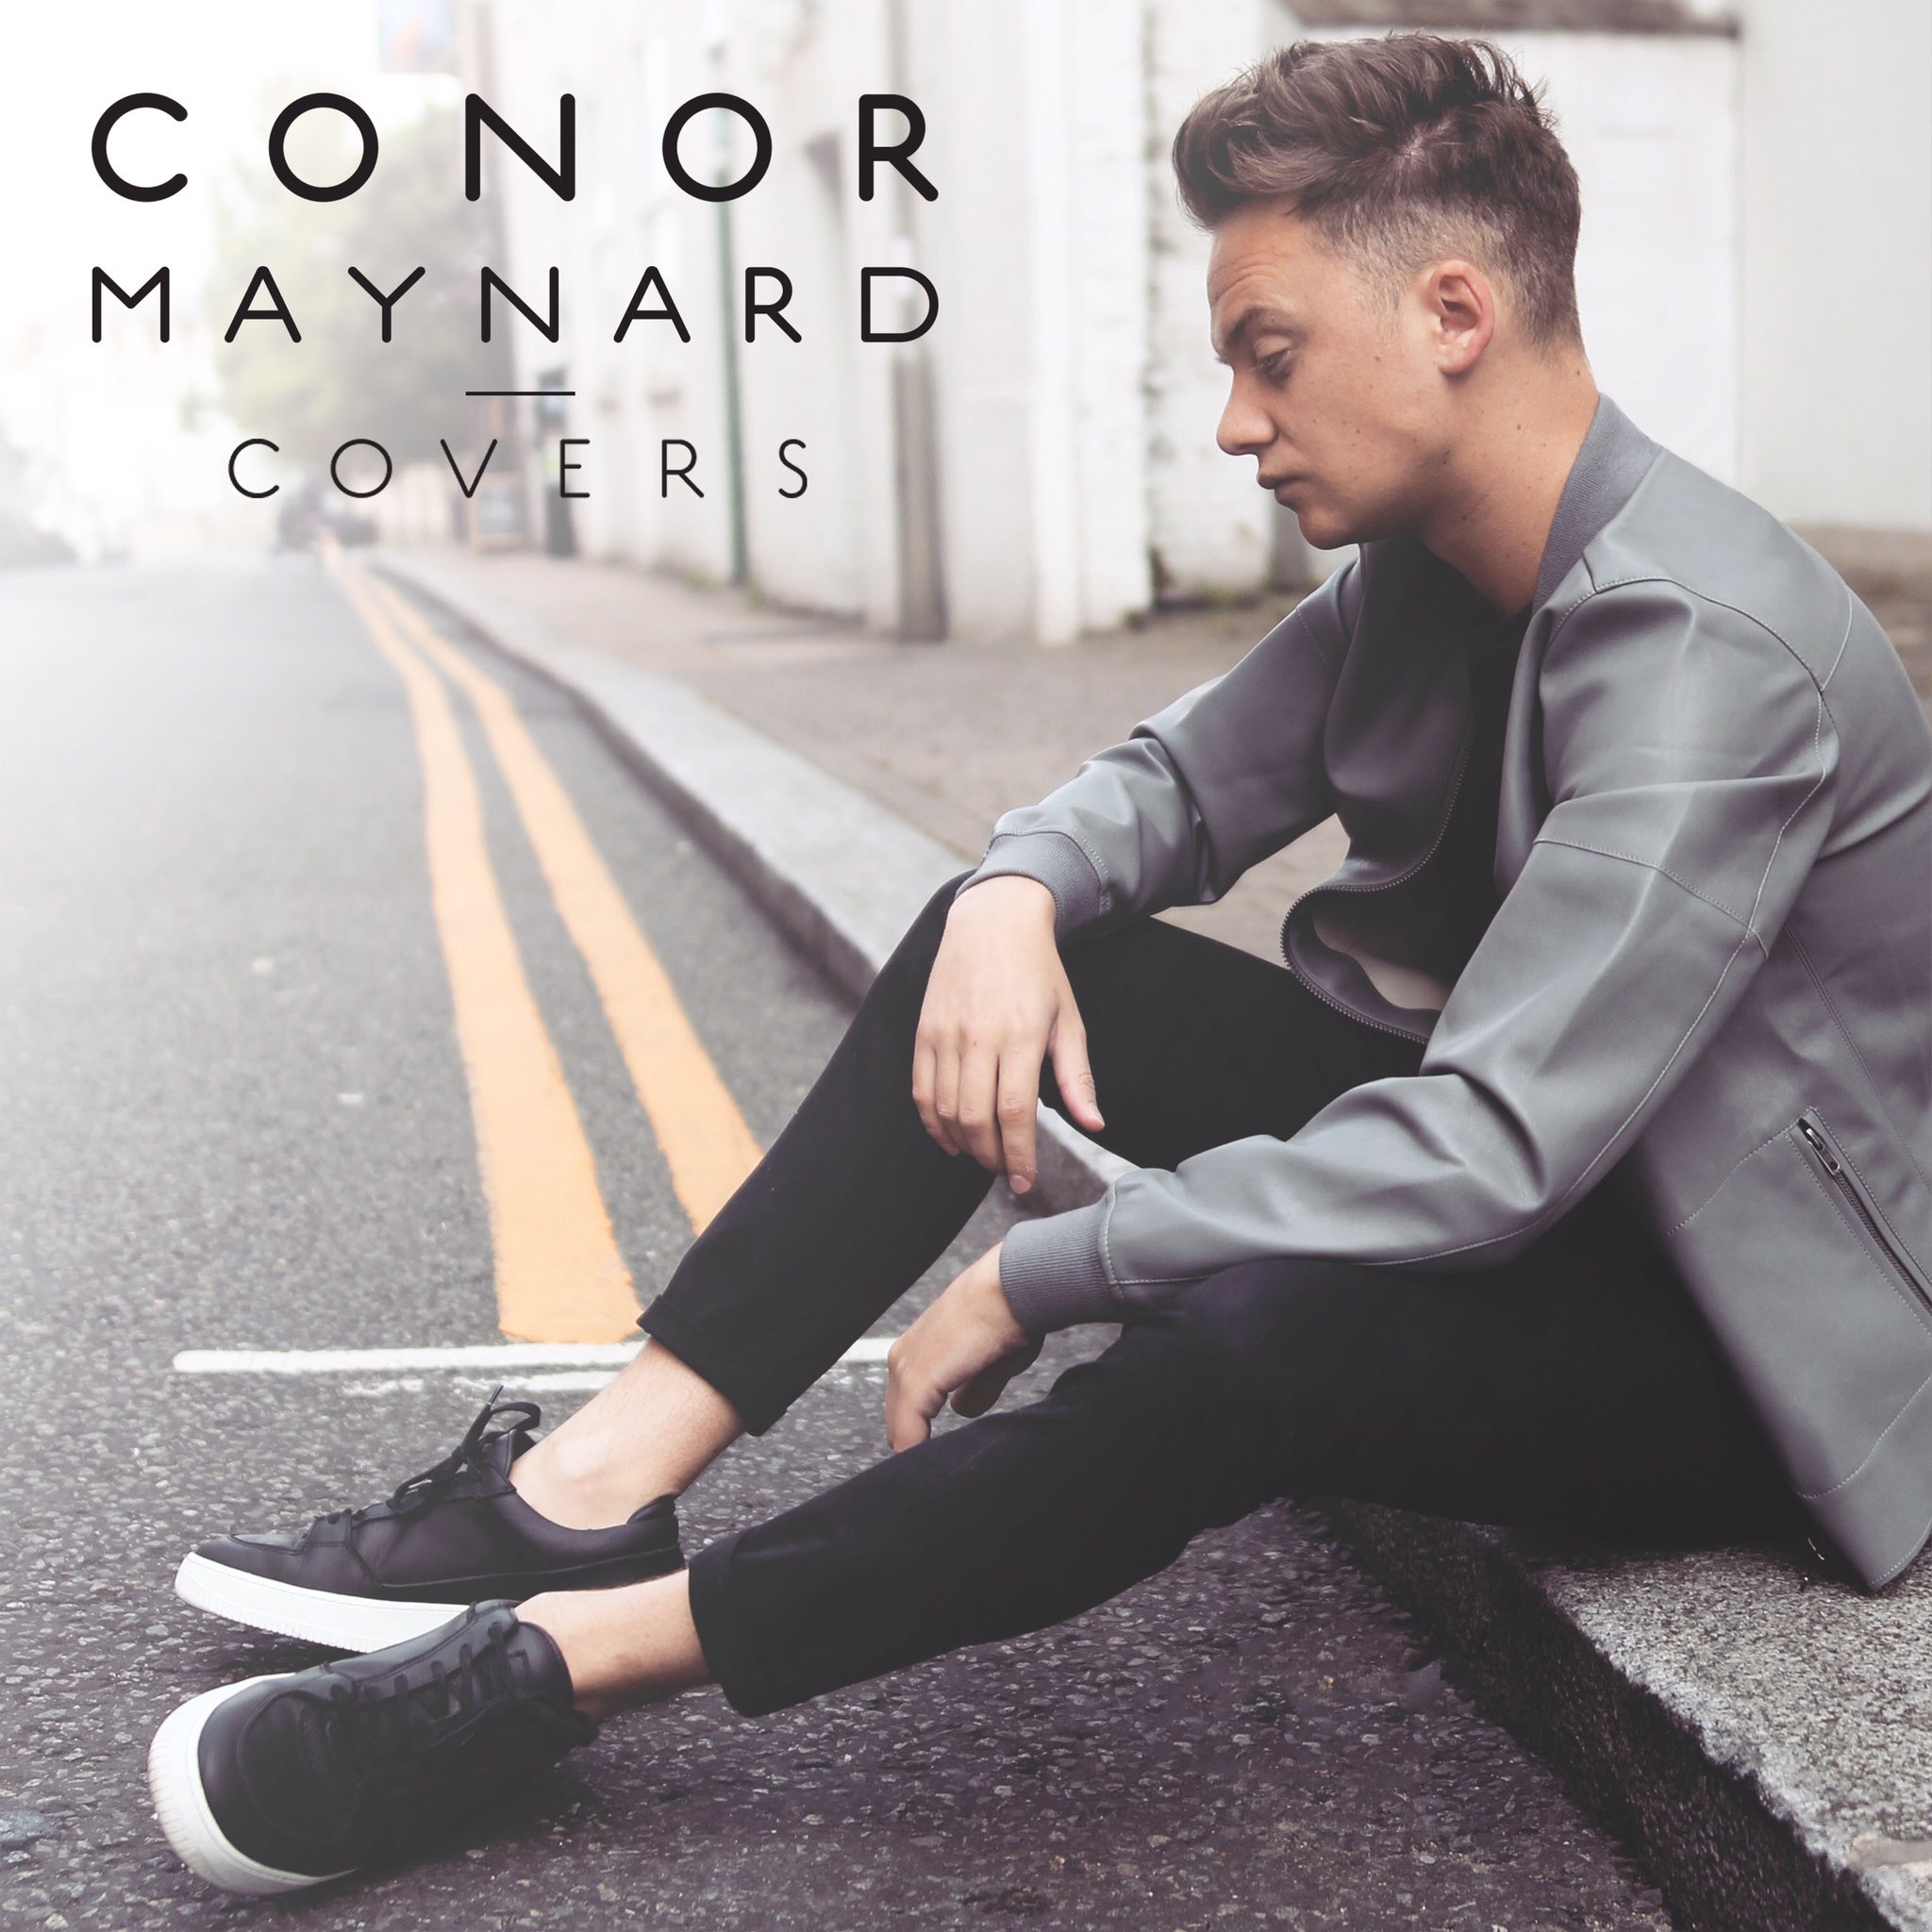 Conor Maynard - Covers (album artwork cover)